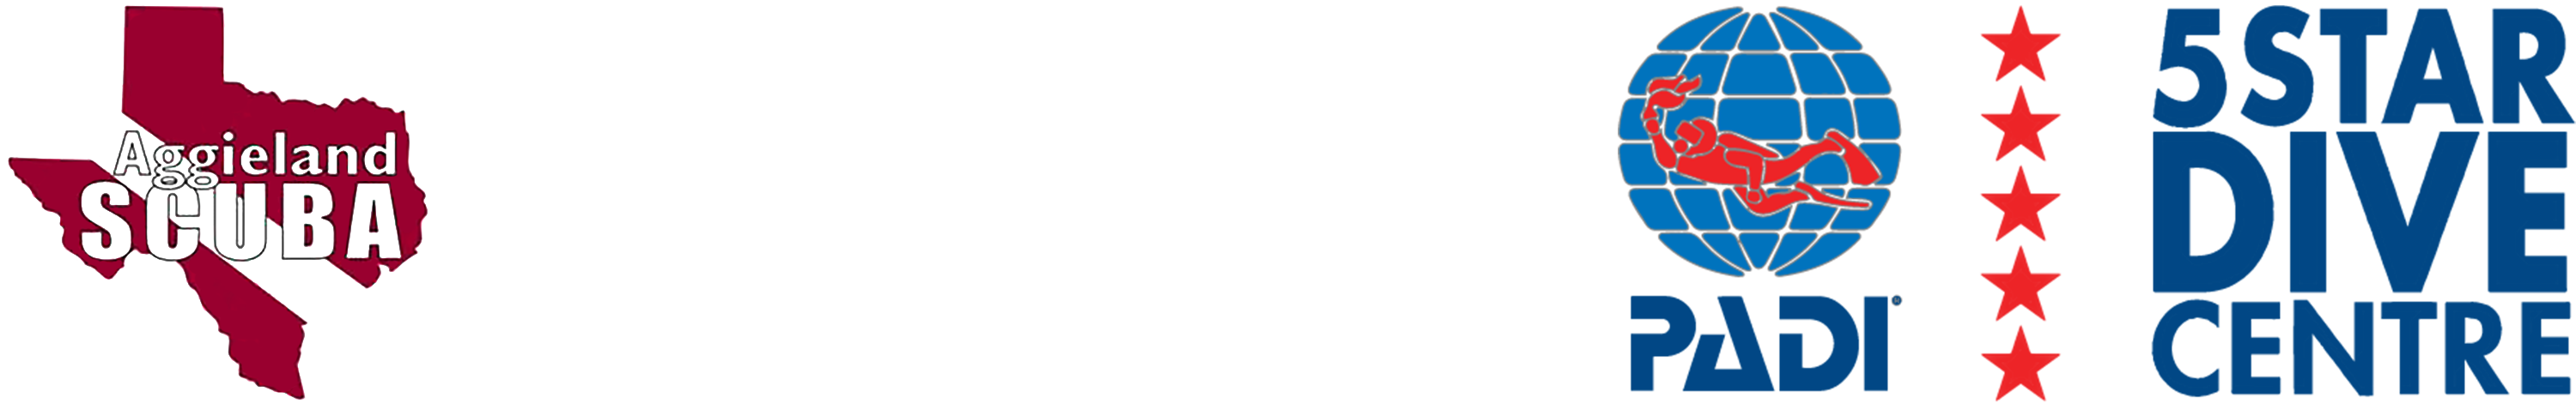 Aggieland-Scuba-Logo-8